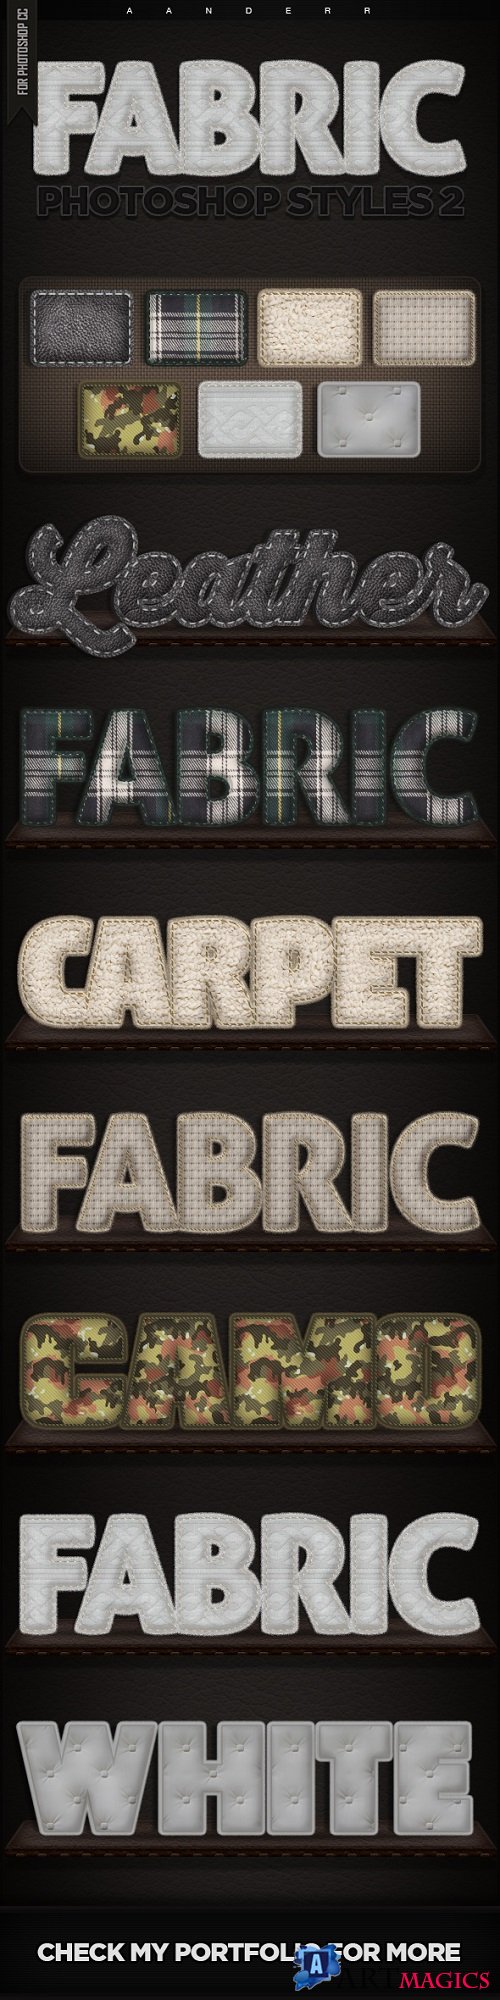 Fabric Photoshop Styles 2  - 18065363